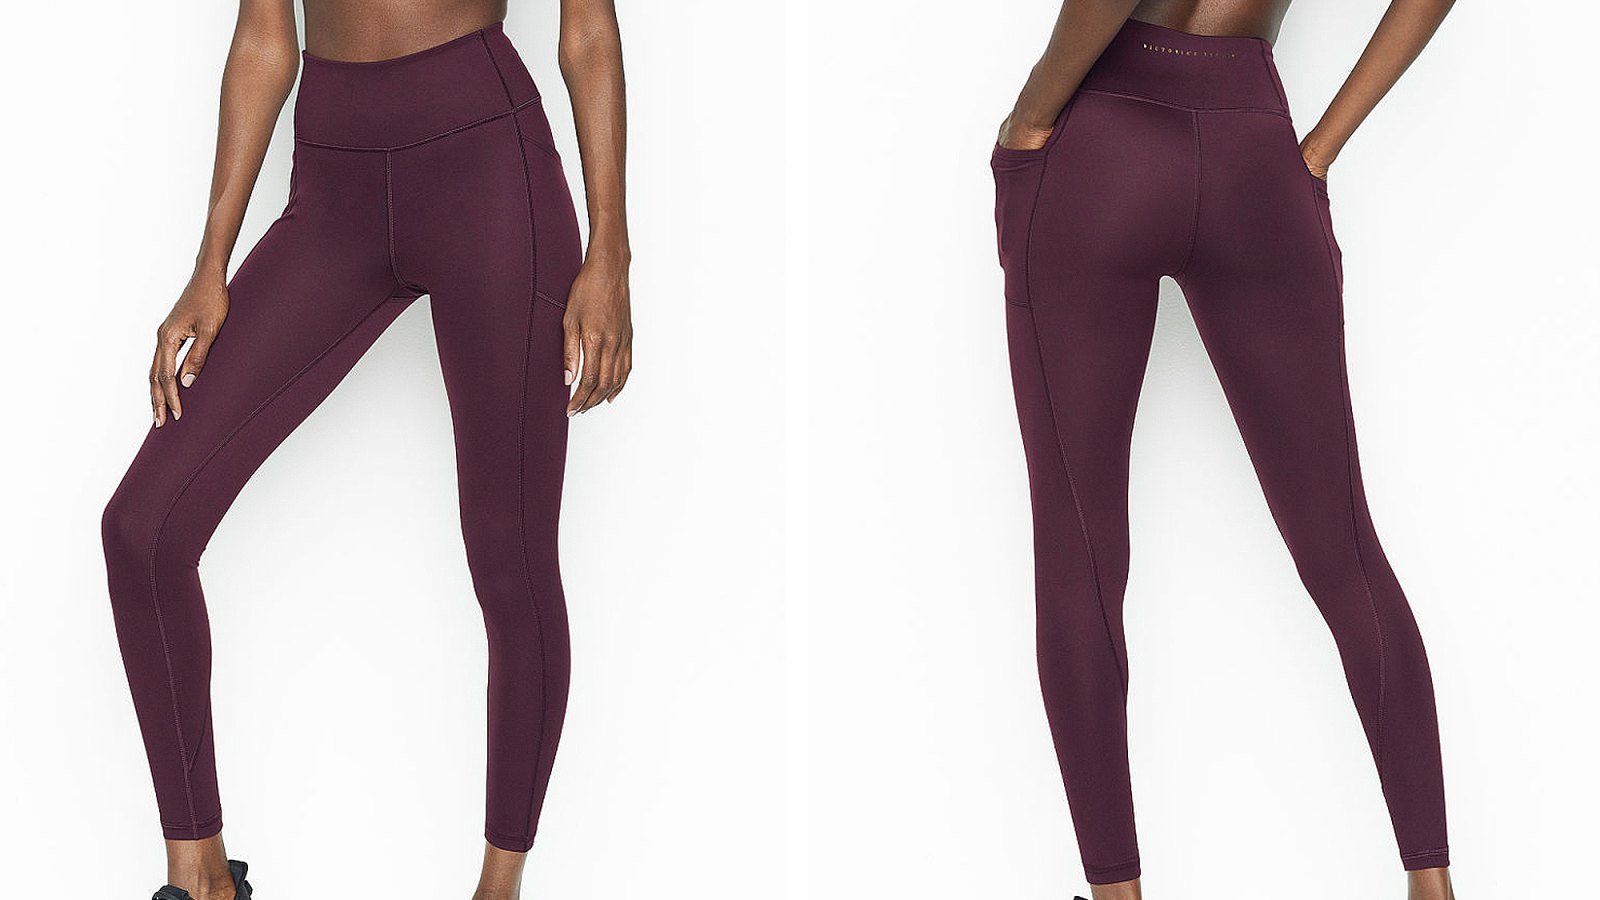 Lululemon purple legging comparison. Threw in some maroon colors as we